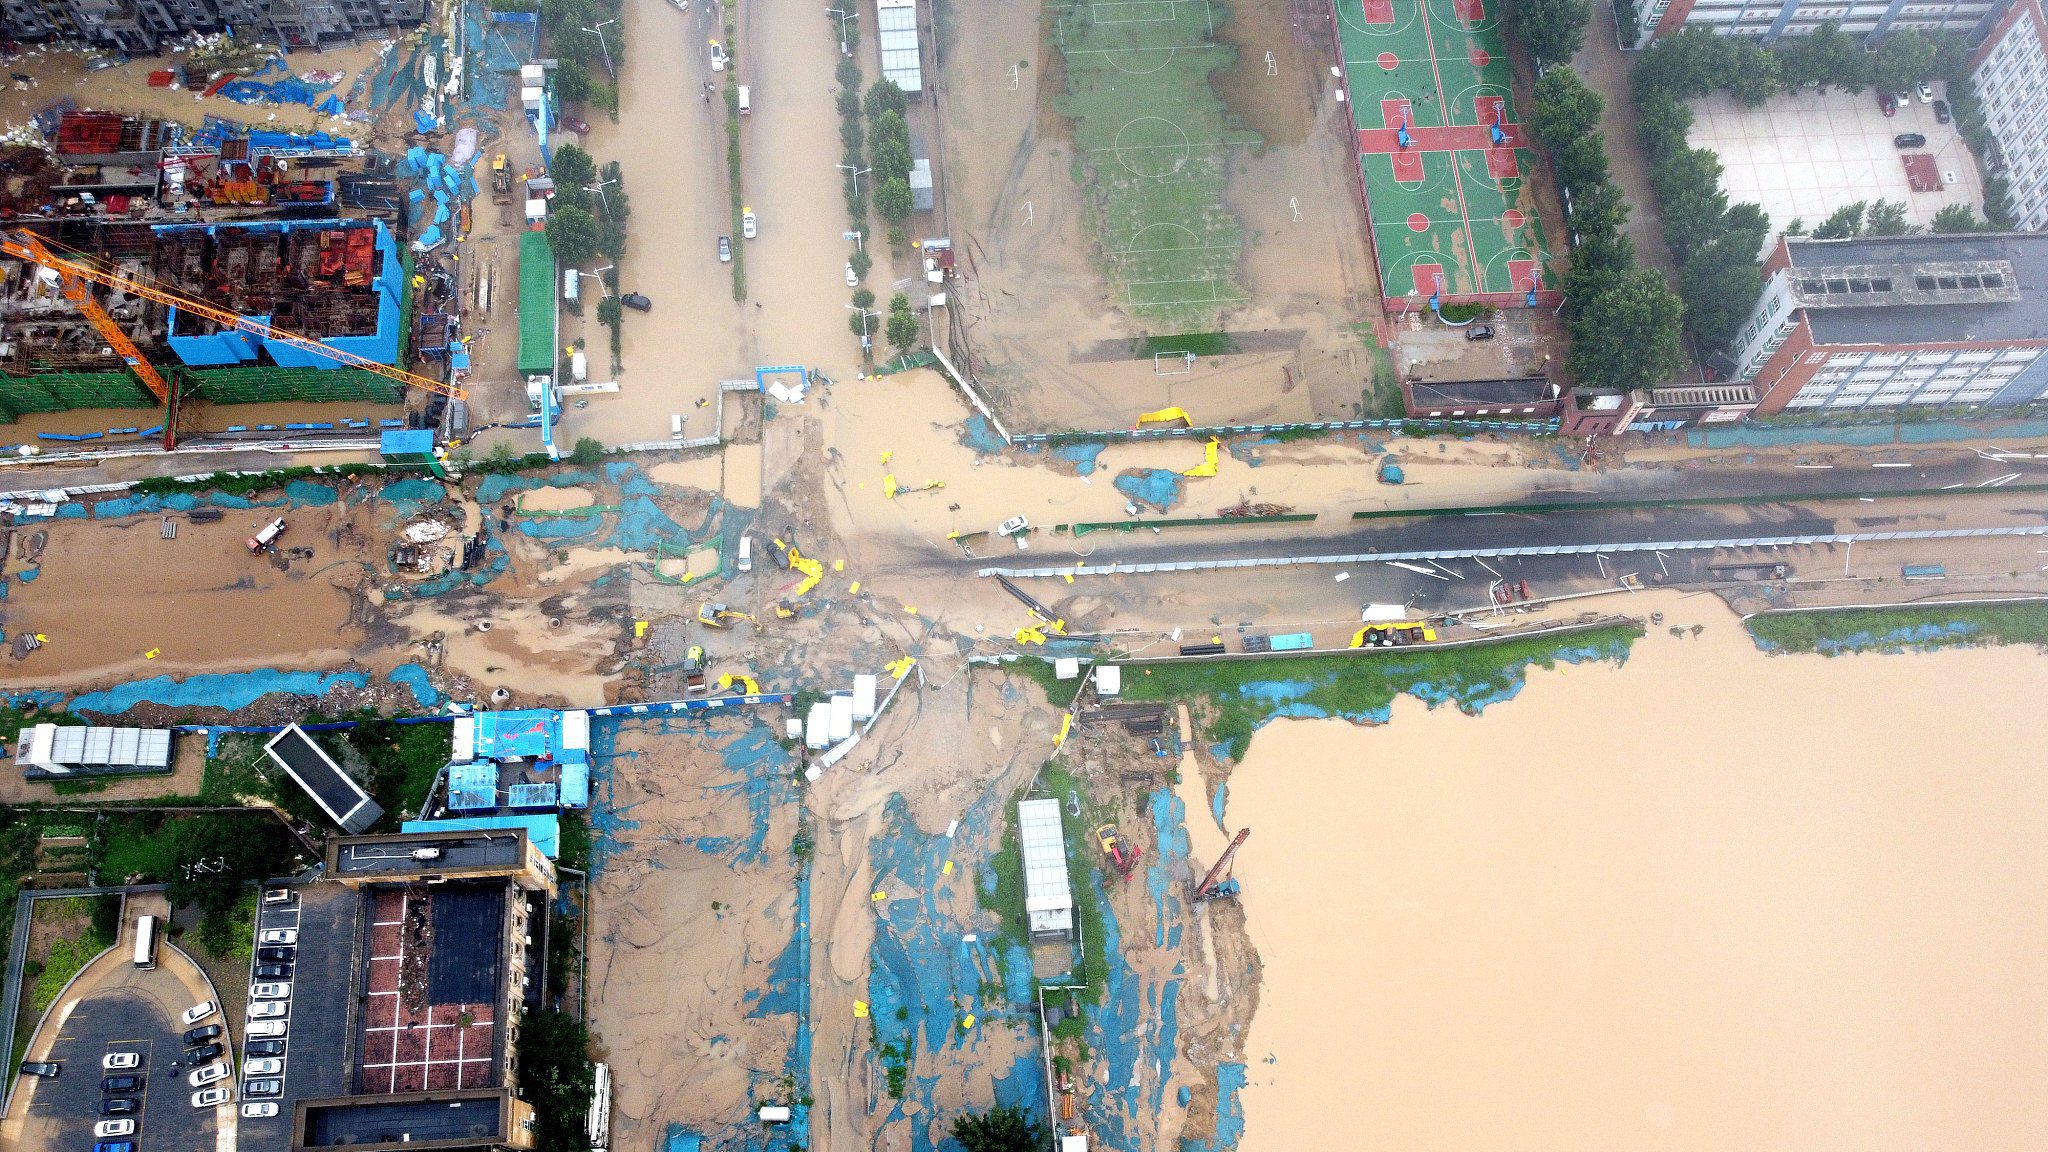 Henan flood 2021